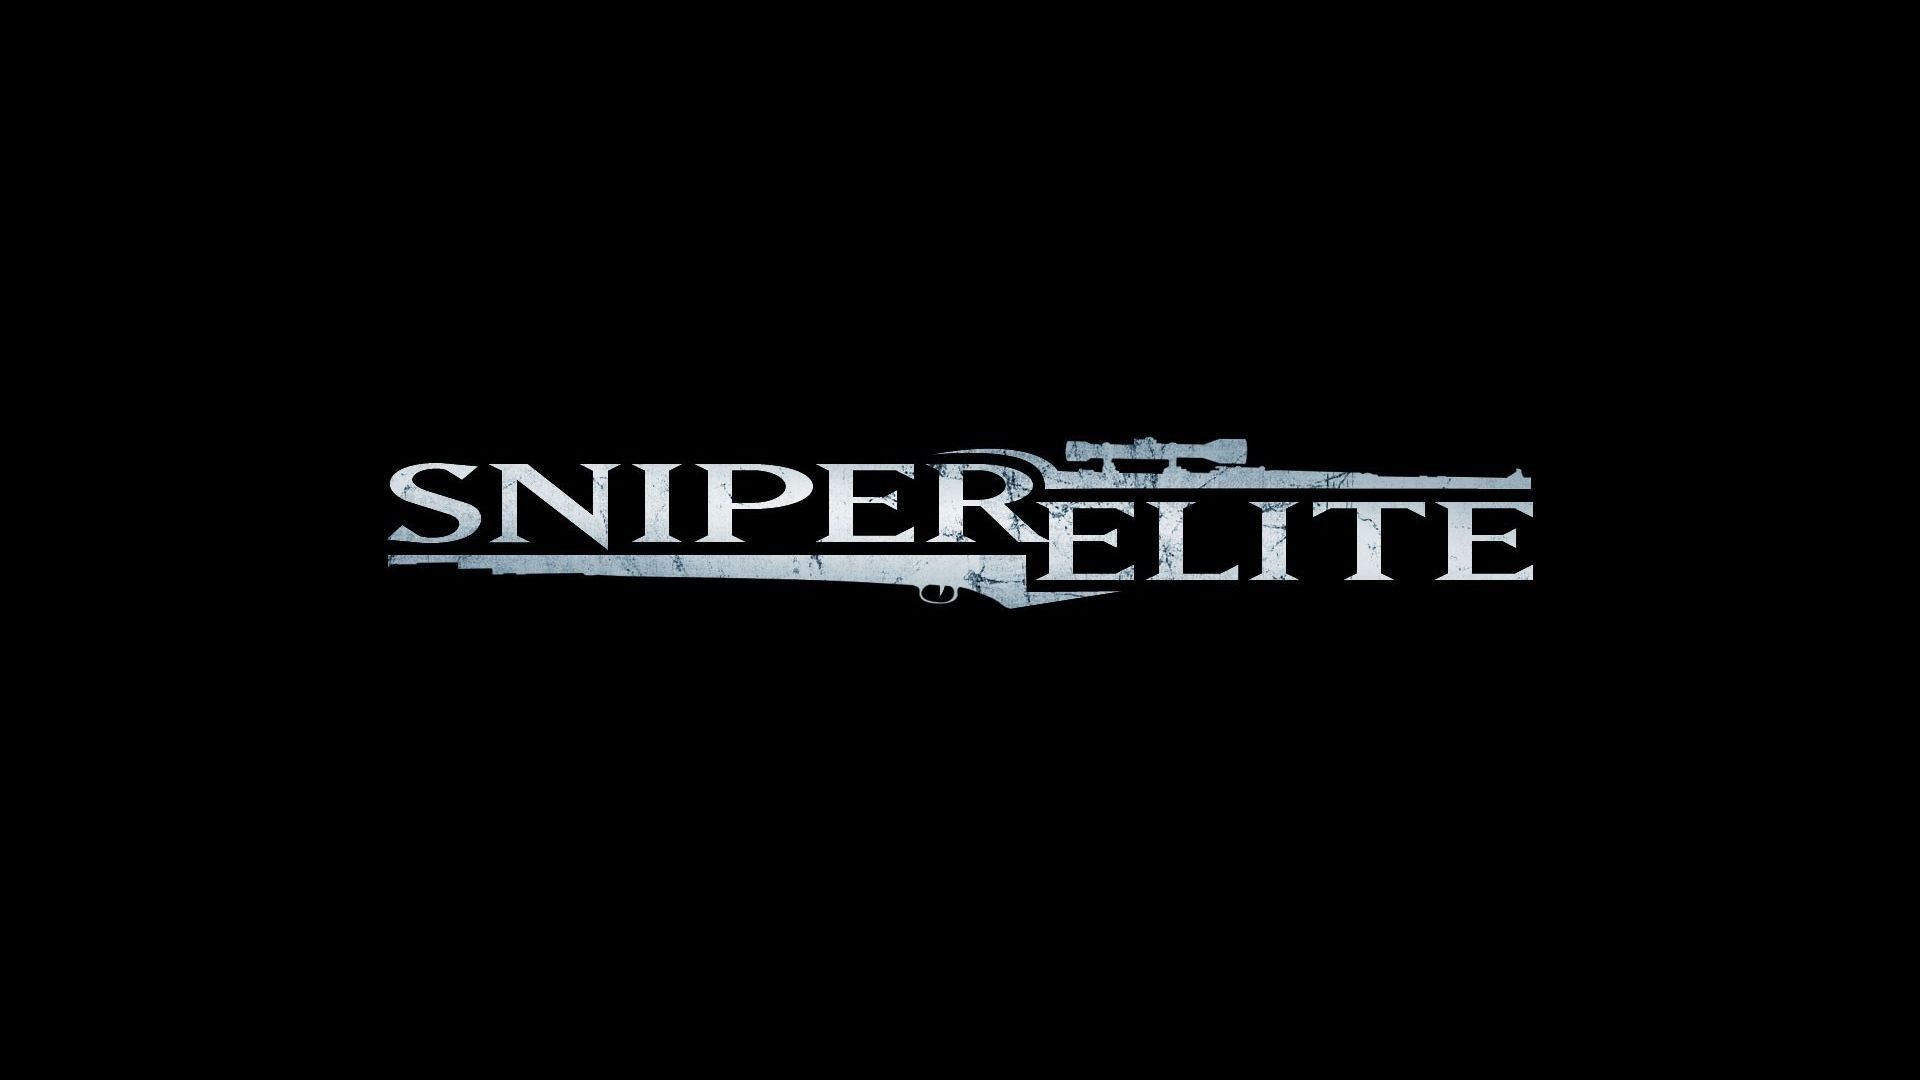 1920x1080 sniper elite logo wallpaper